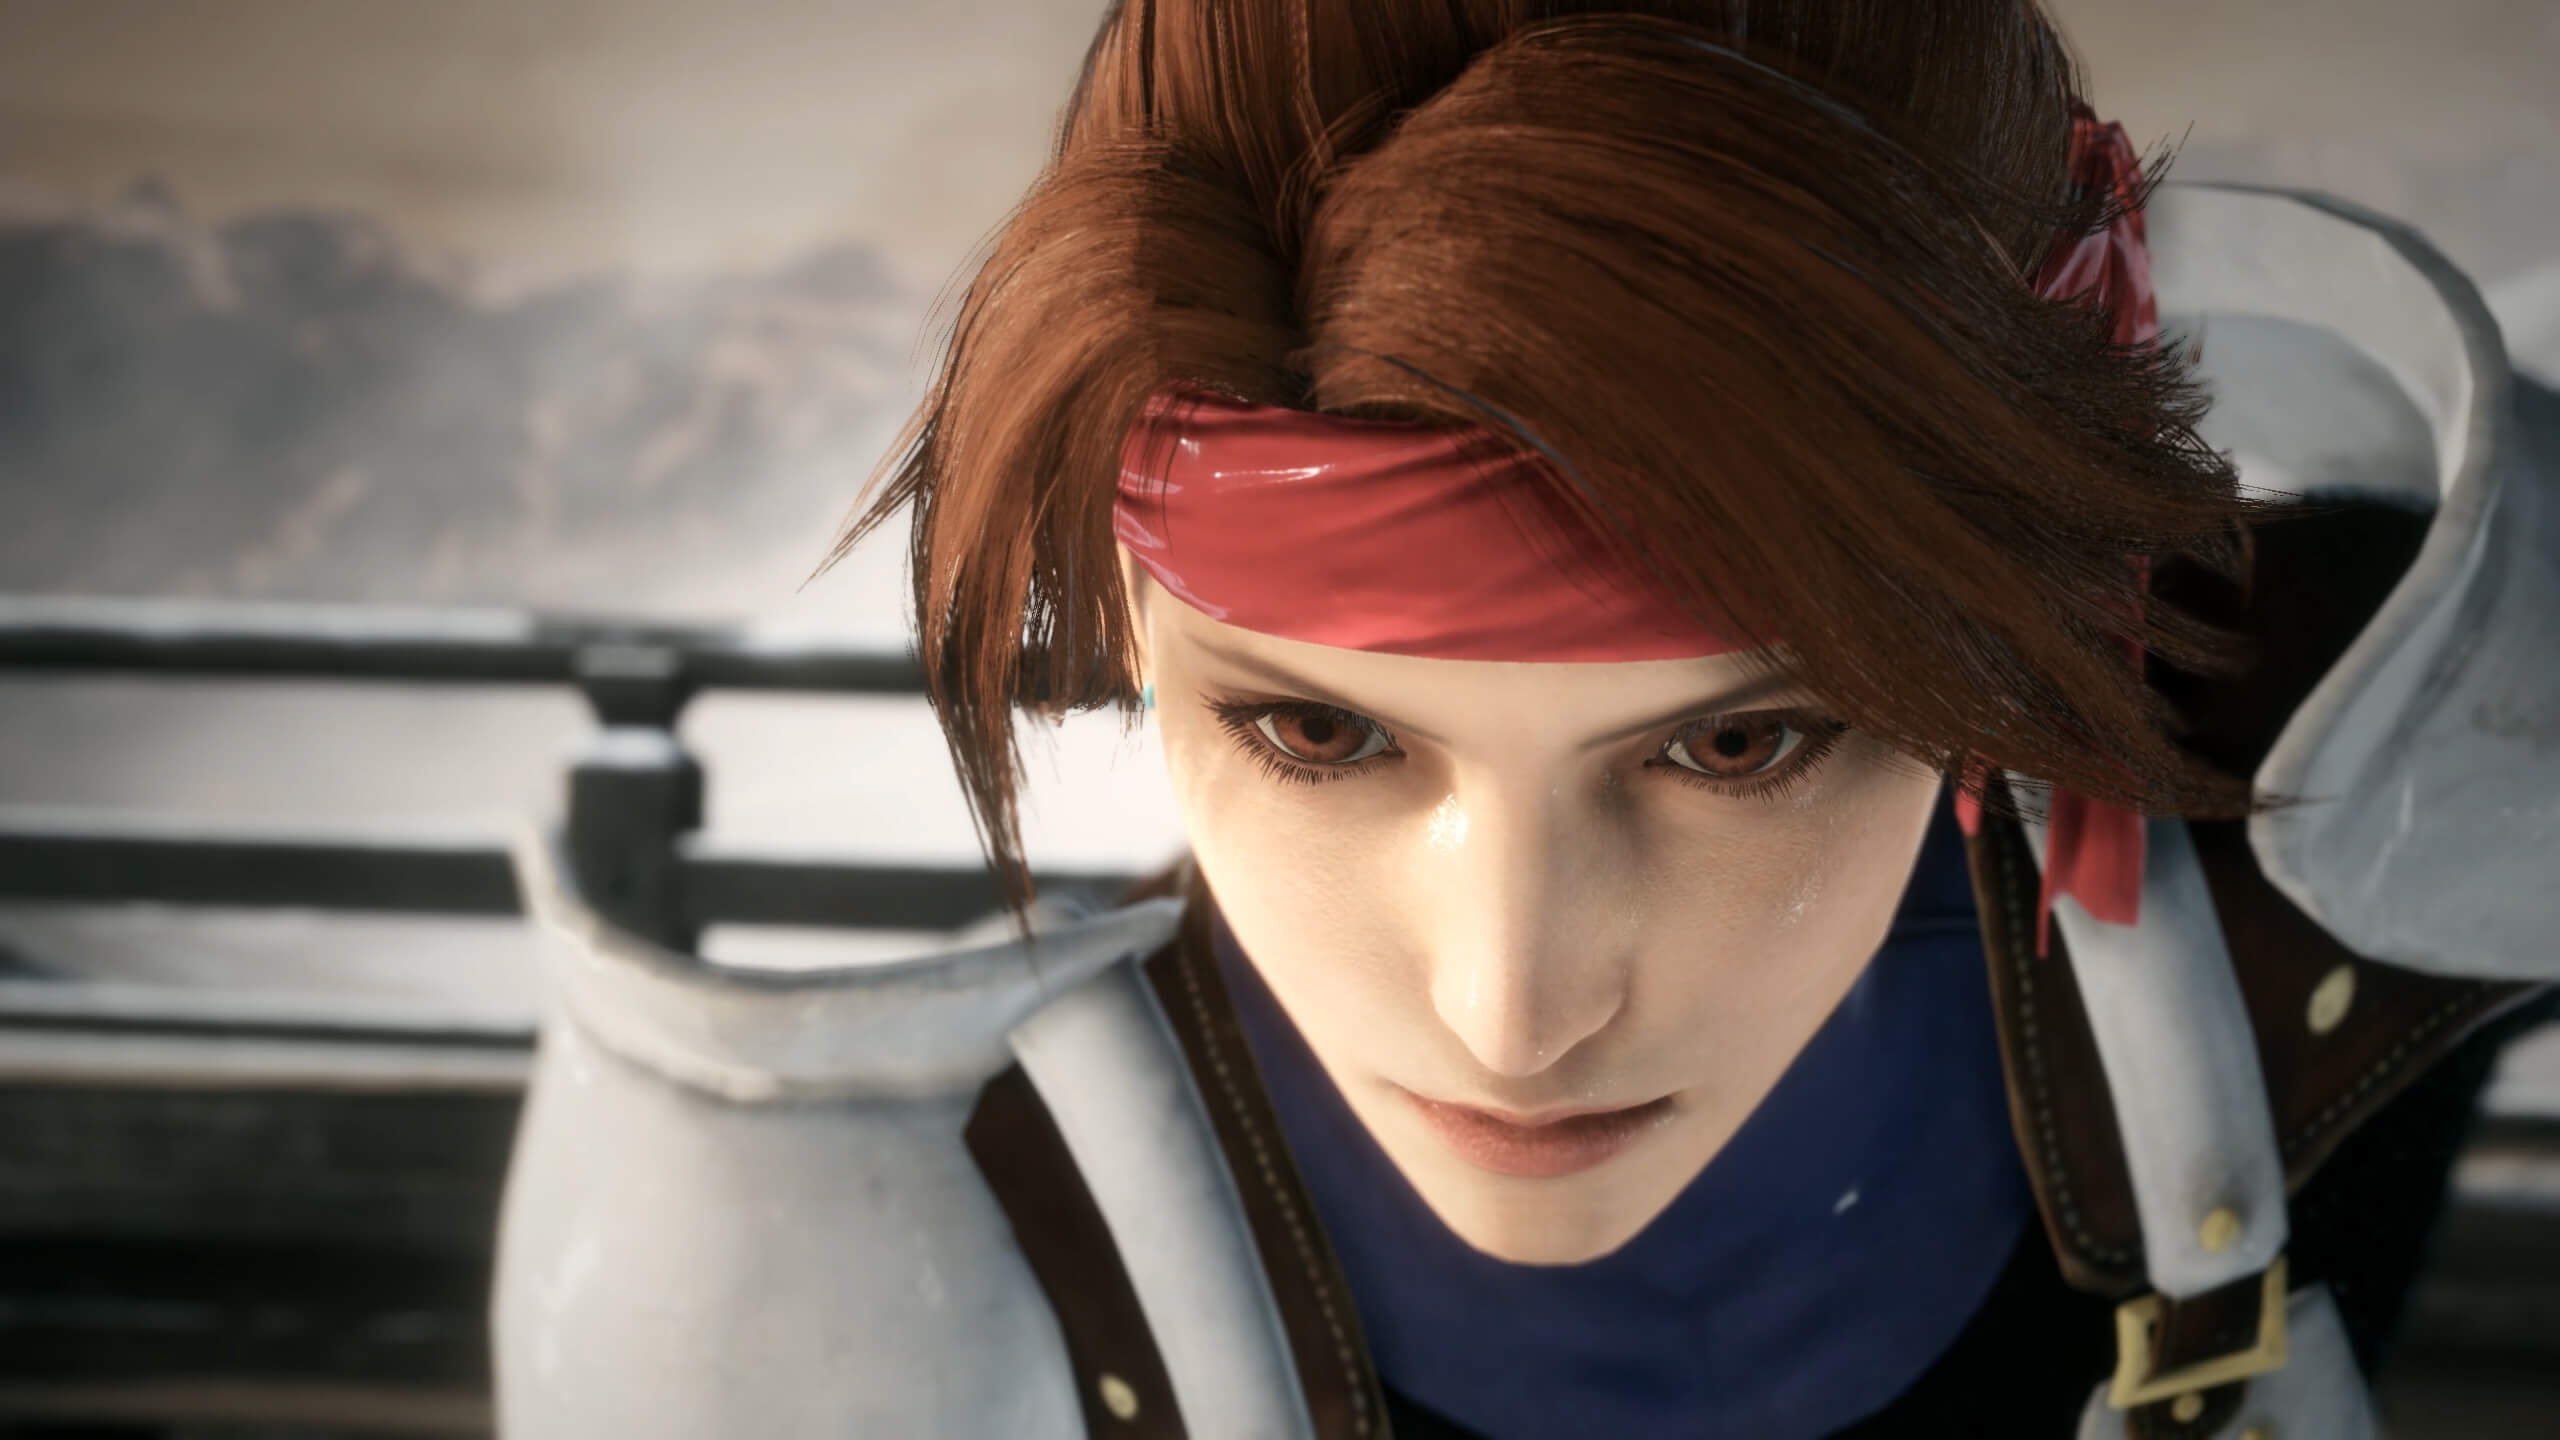 Sekiro Final Fantasy VII Remake Mod Allows You to Play as Cloud